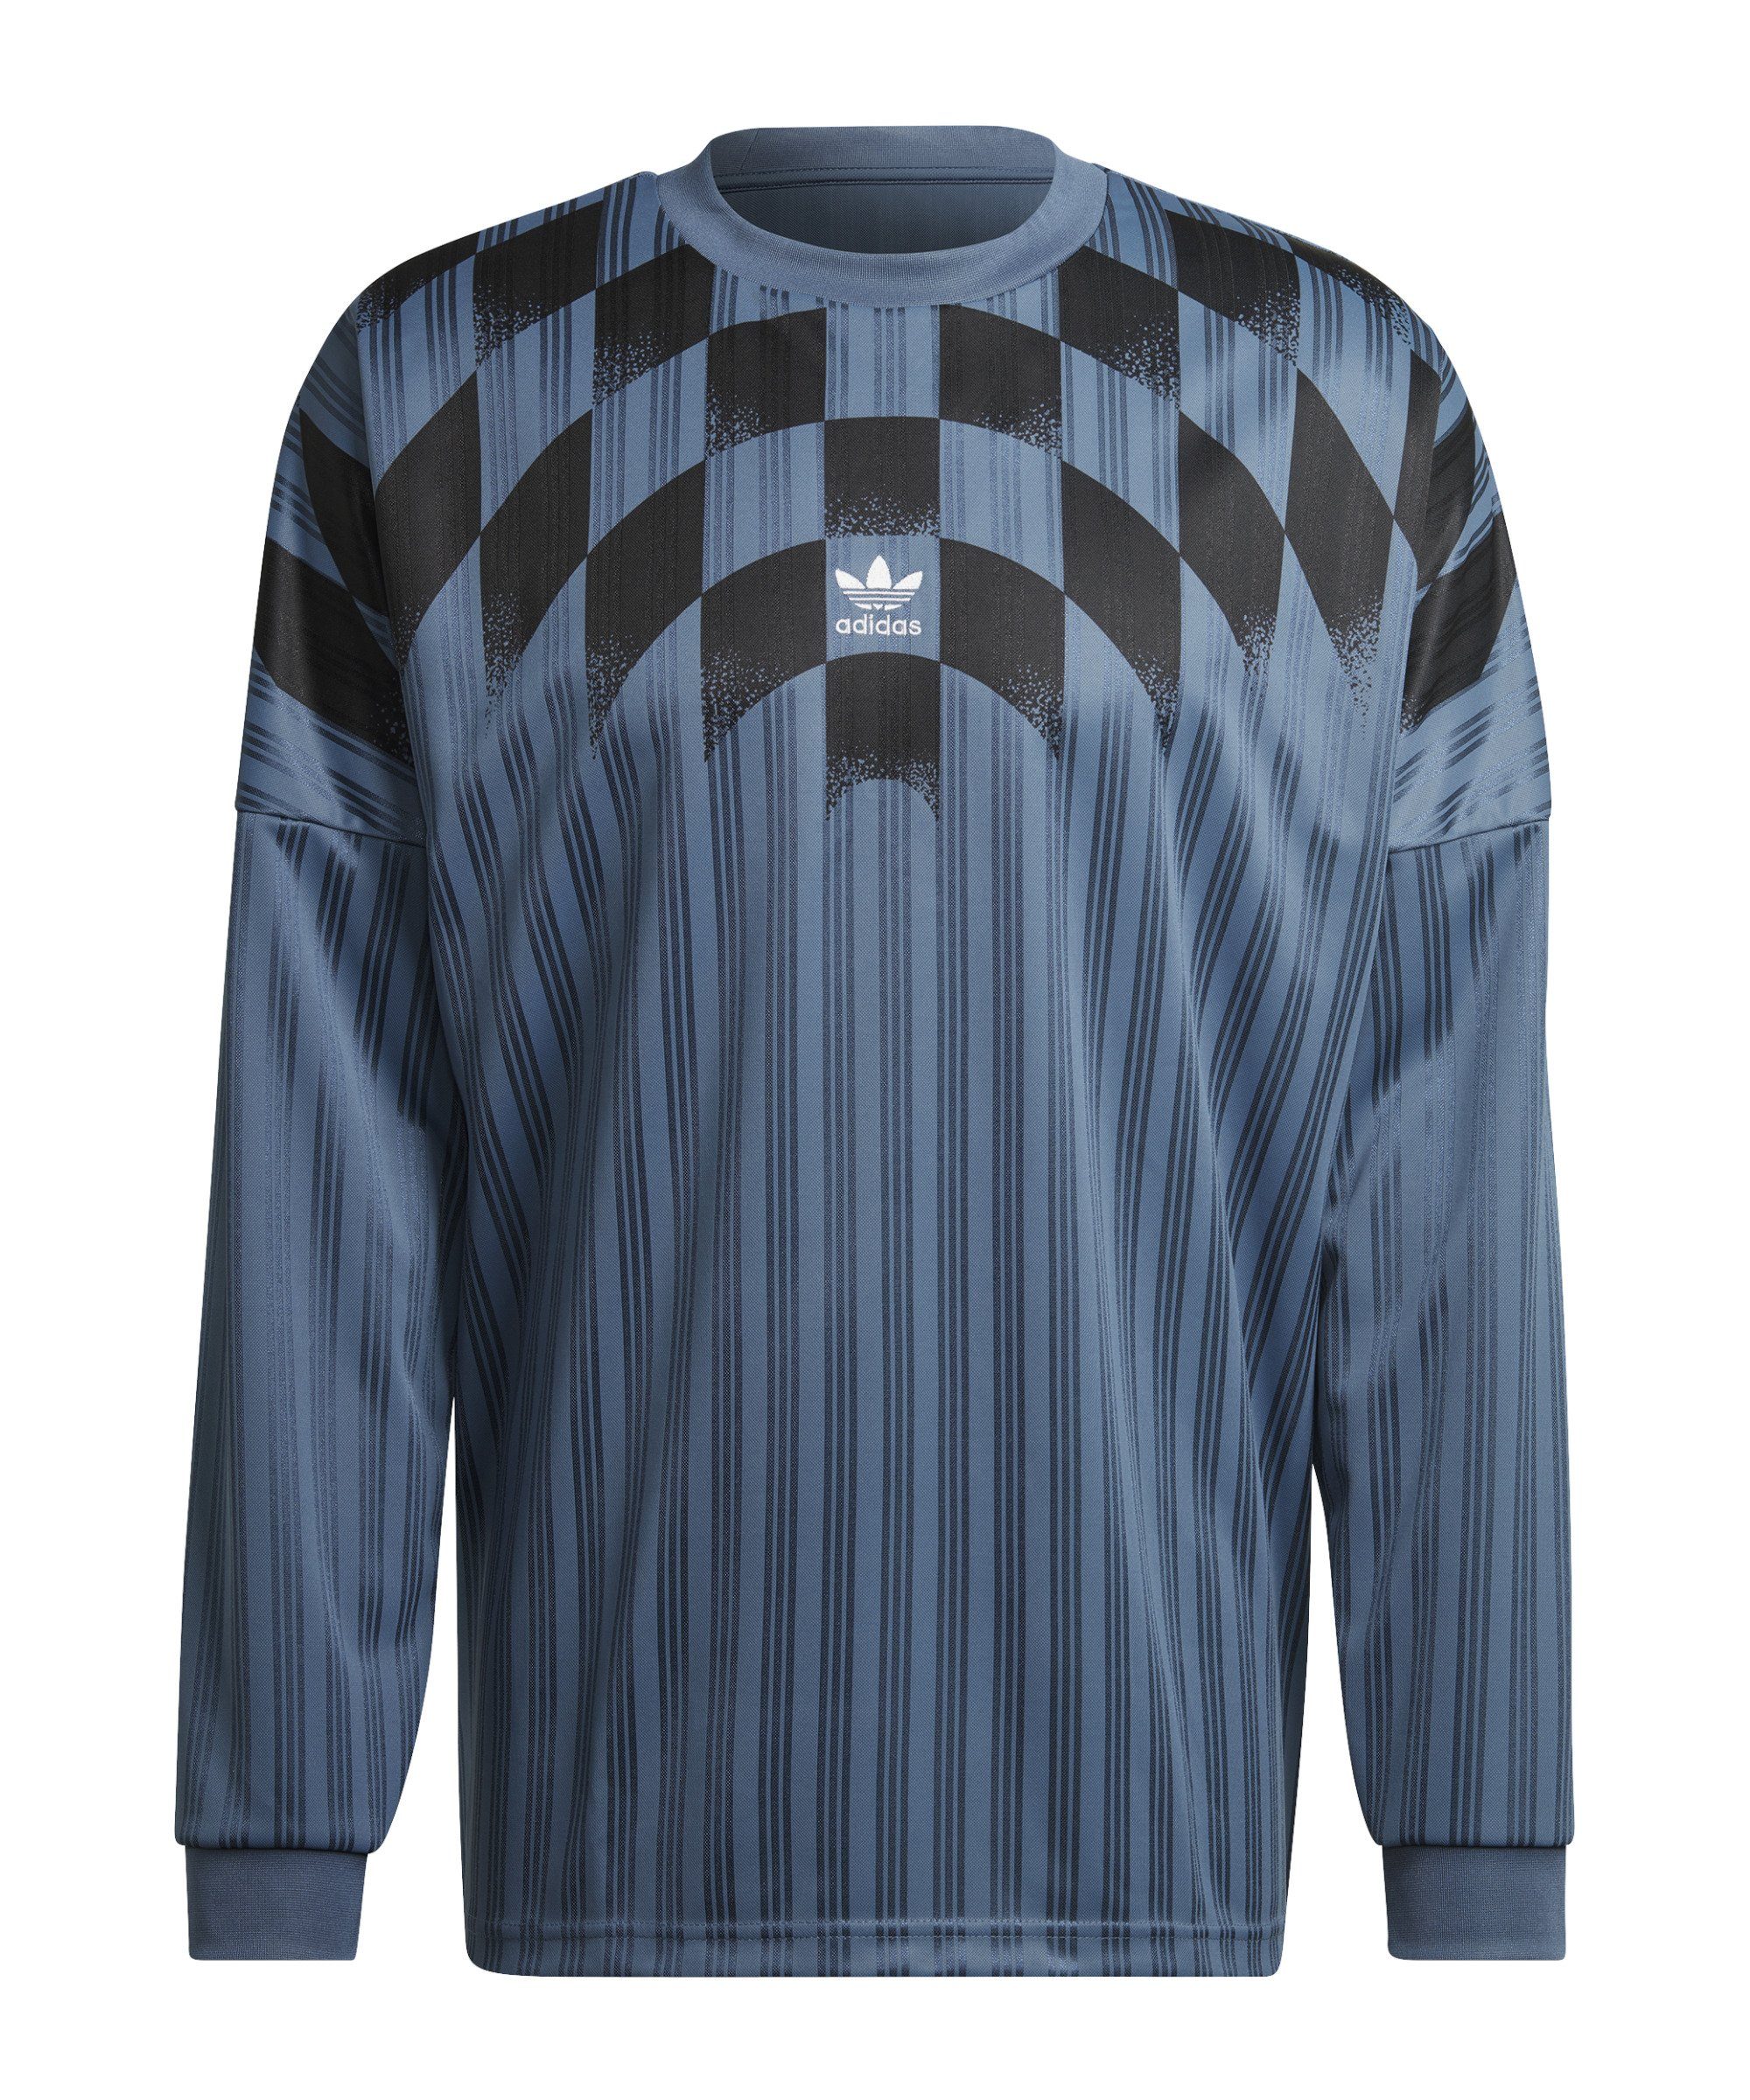 adidas Originals Sweatshirt GRF Sweatshirt blauschwarz